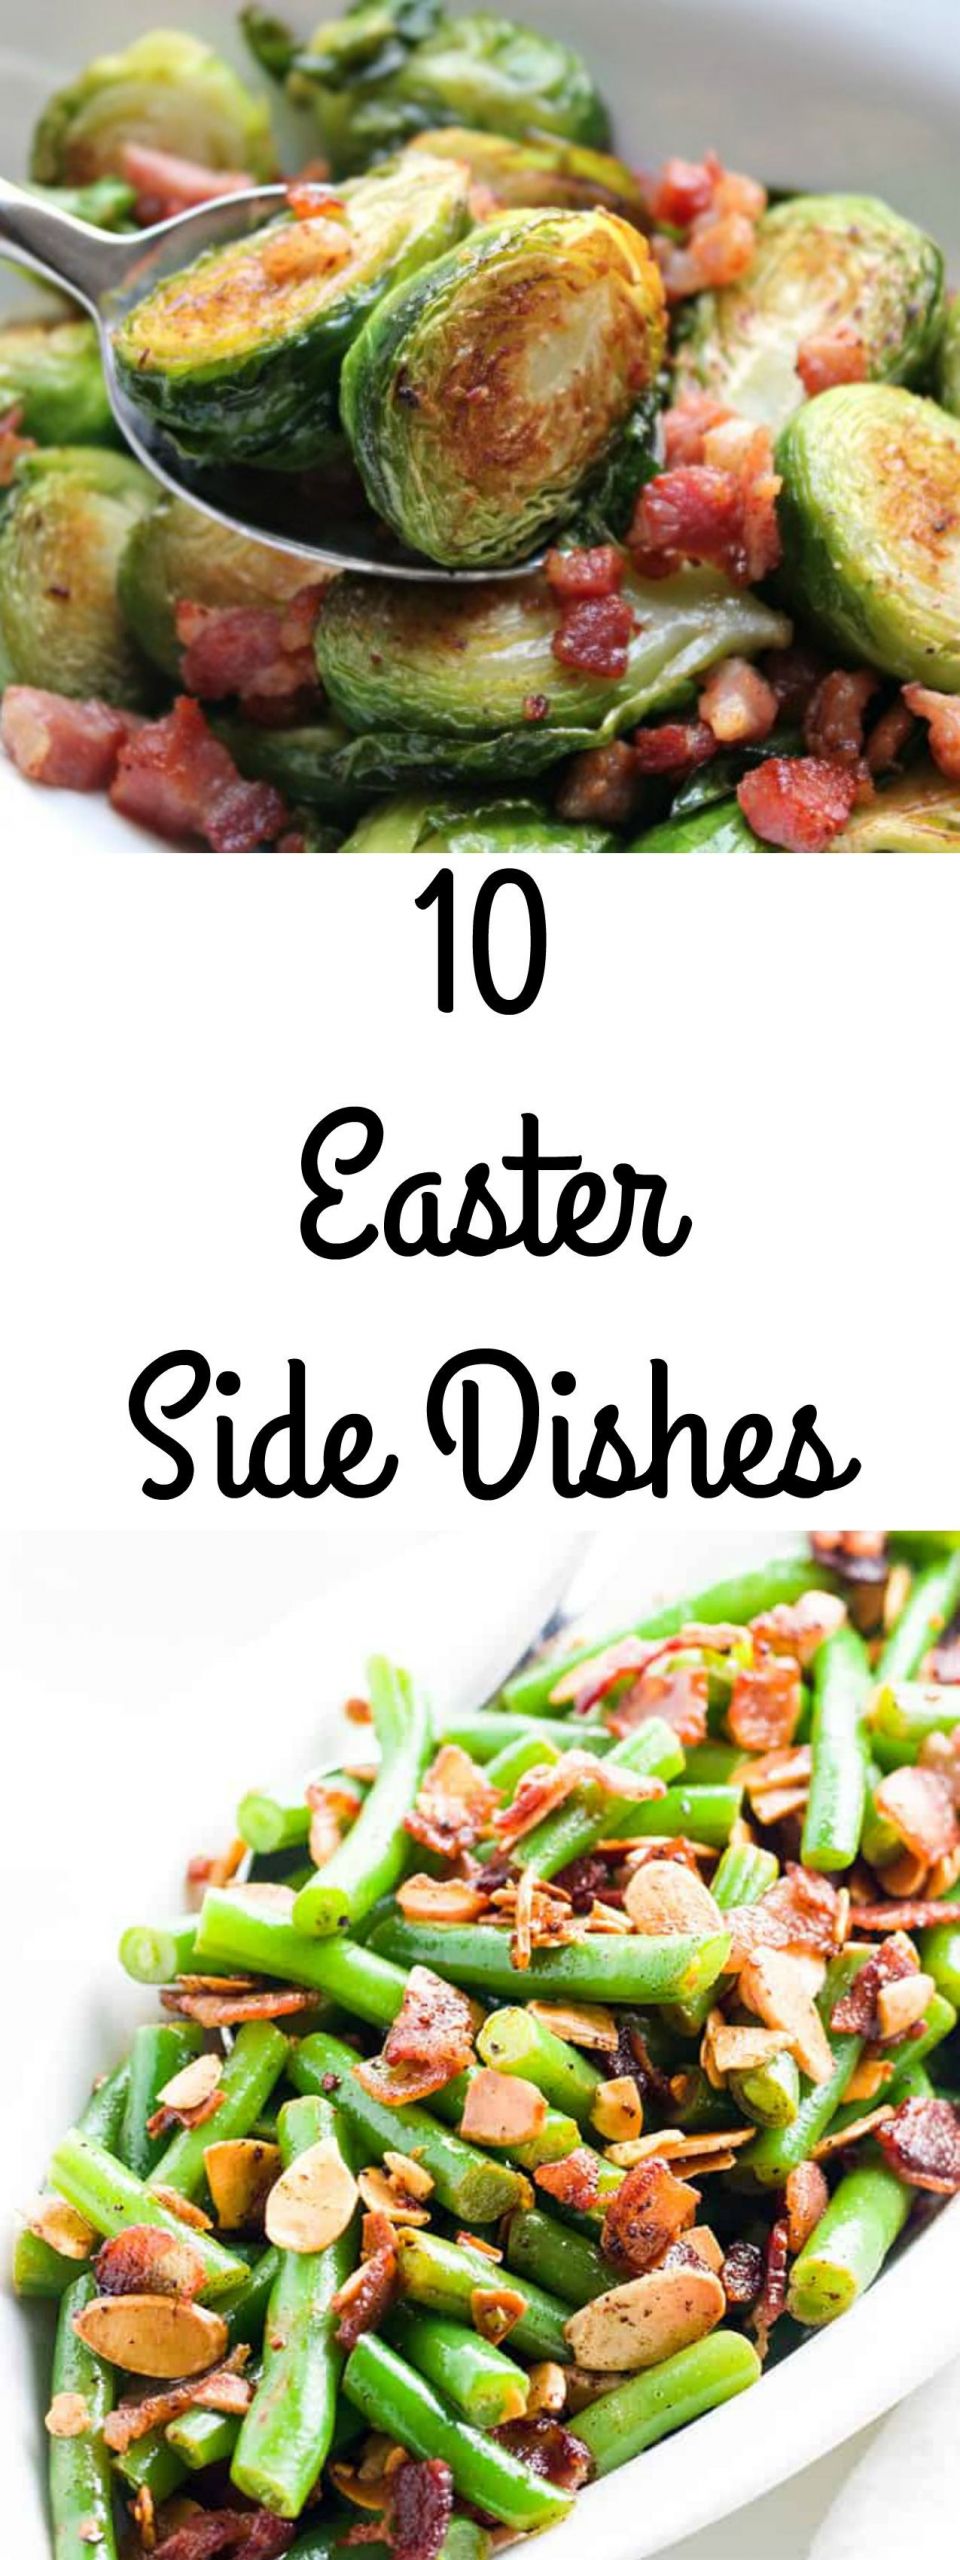 Vegetable Side Dishes For Easter Dinner
 10 Easter Side Dishes